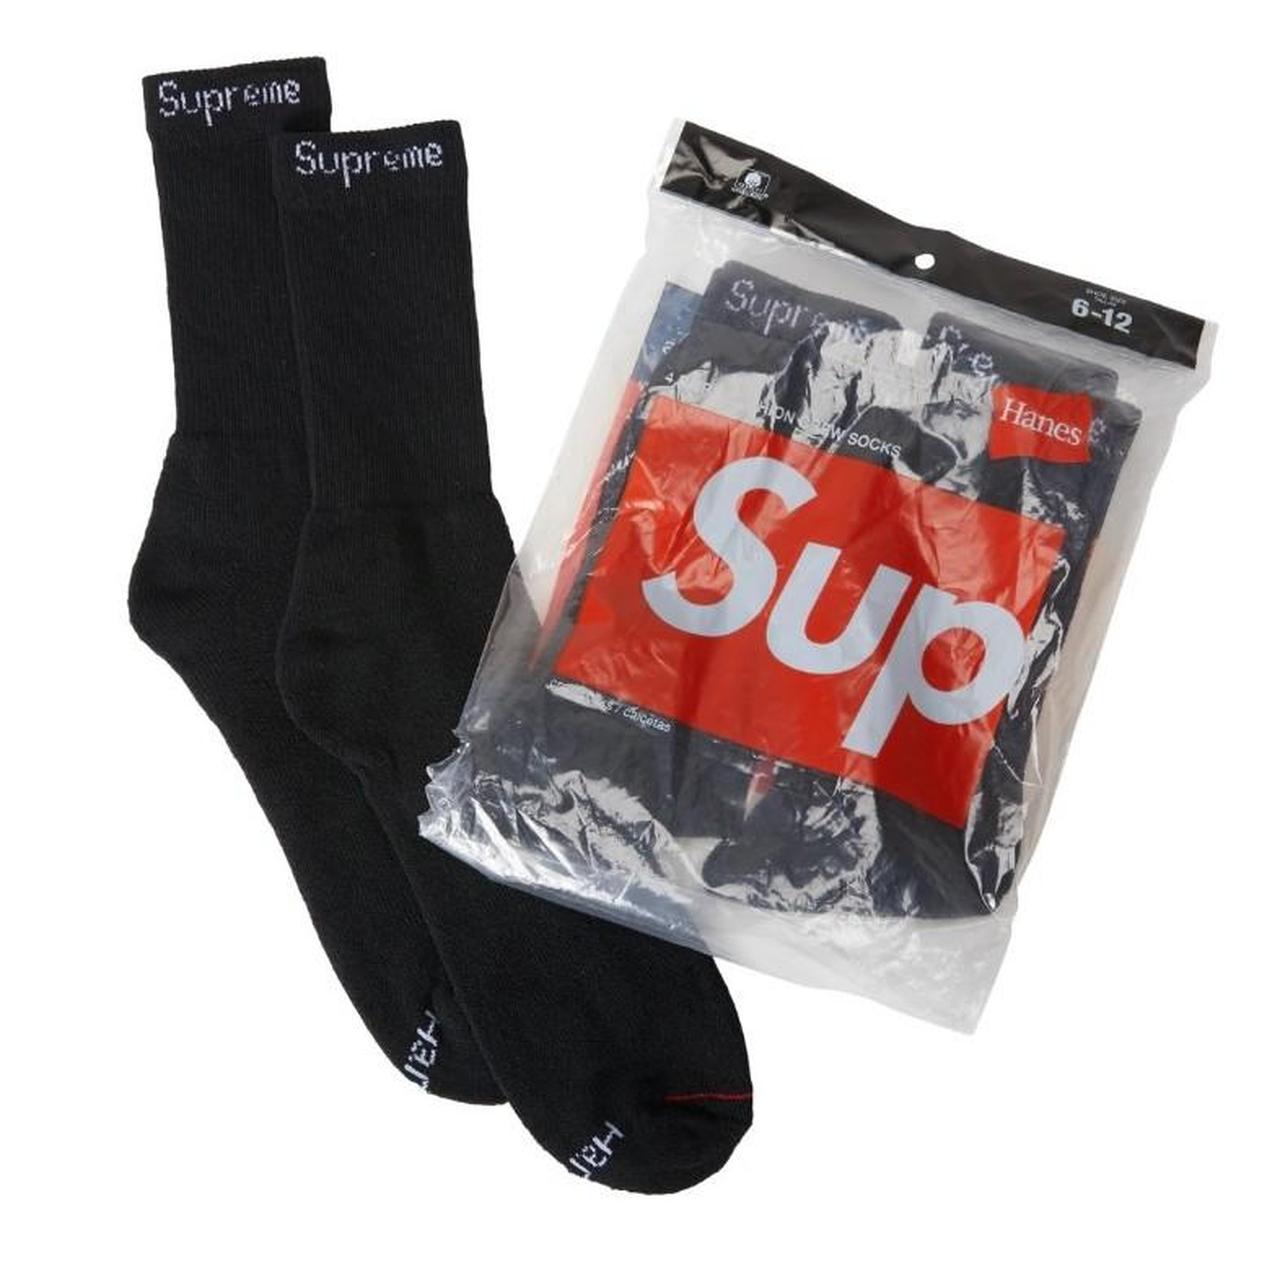 Product Image 1 - Supreme Hanes socks
4 pairs
New